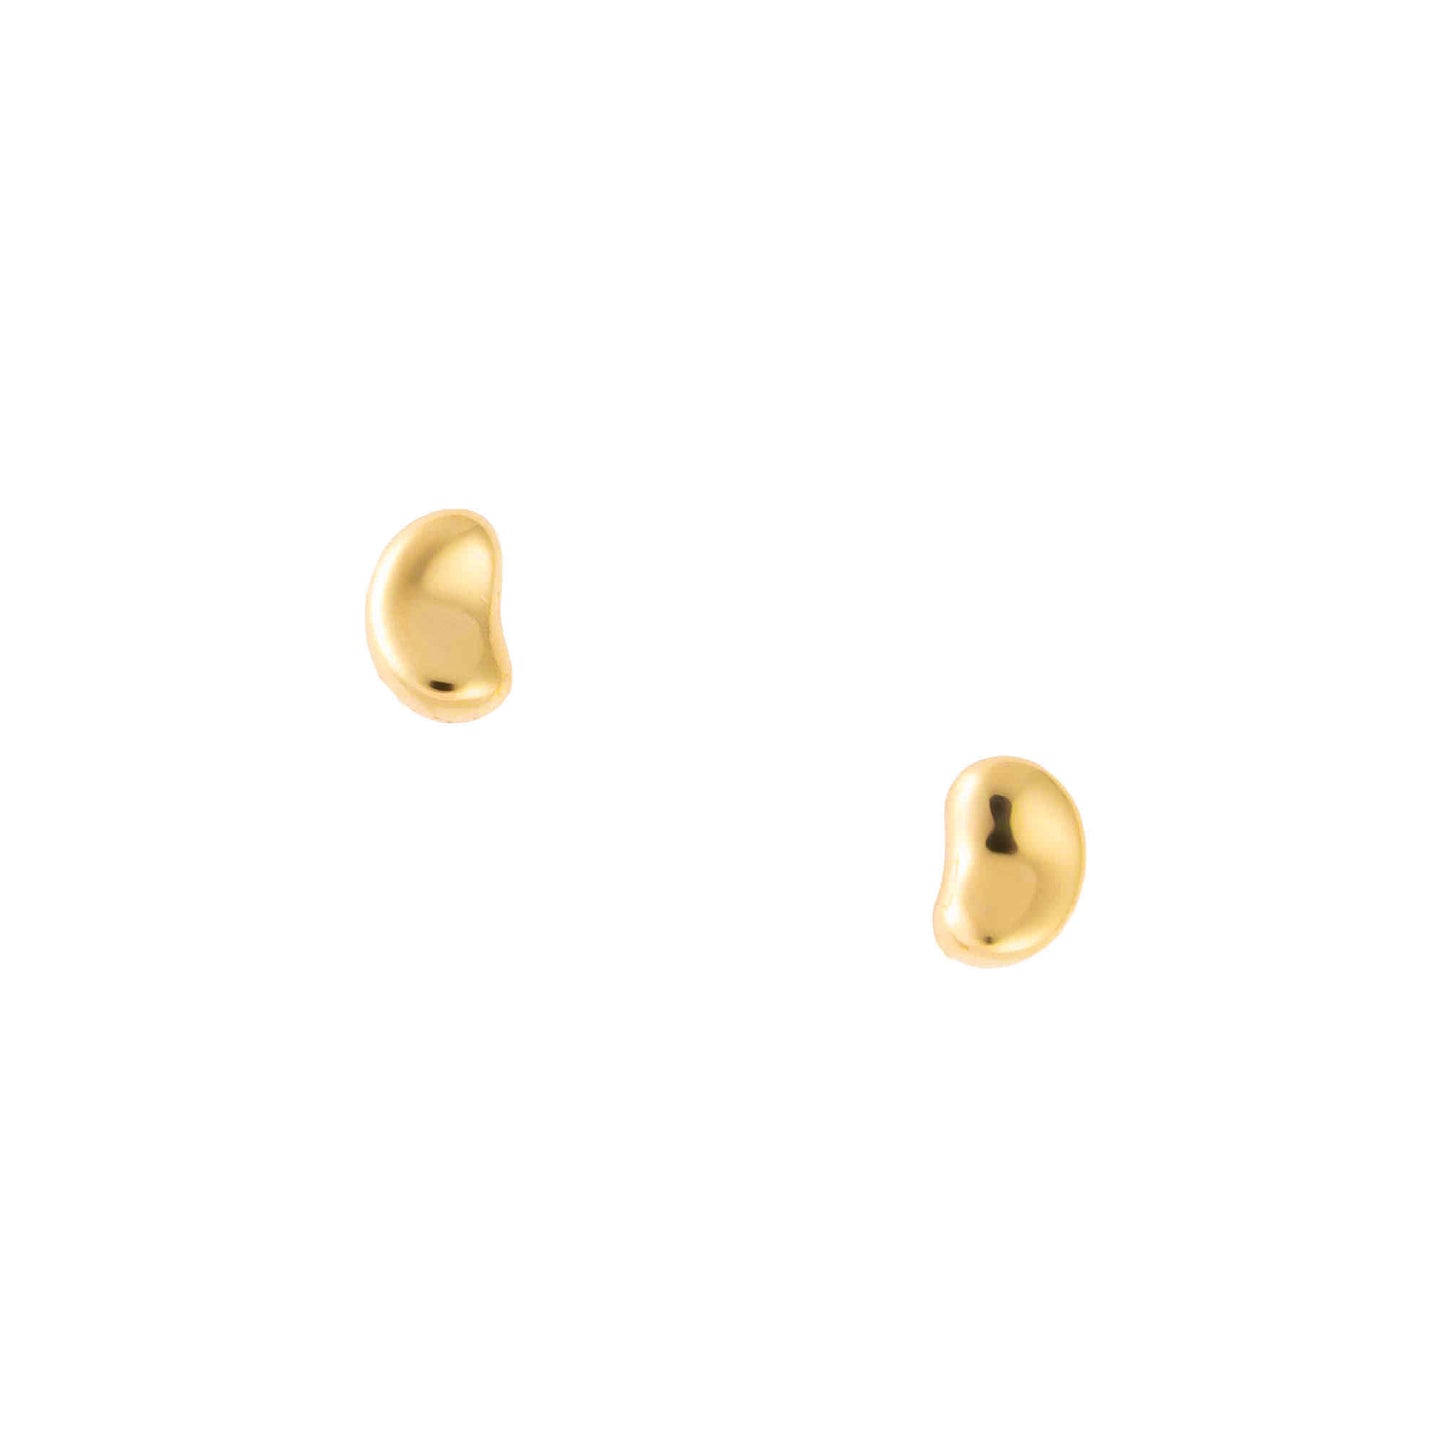 Earrings "Bean golden 8mm"